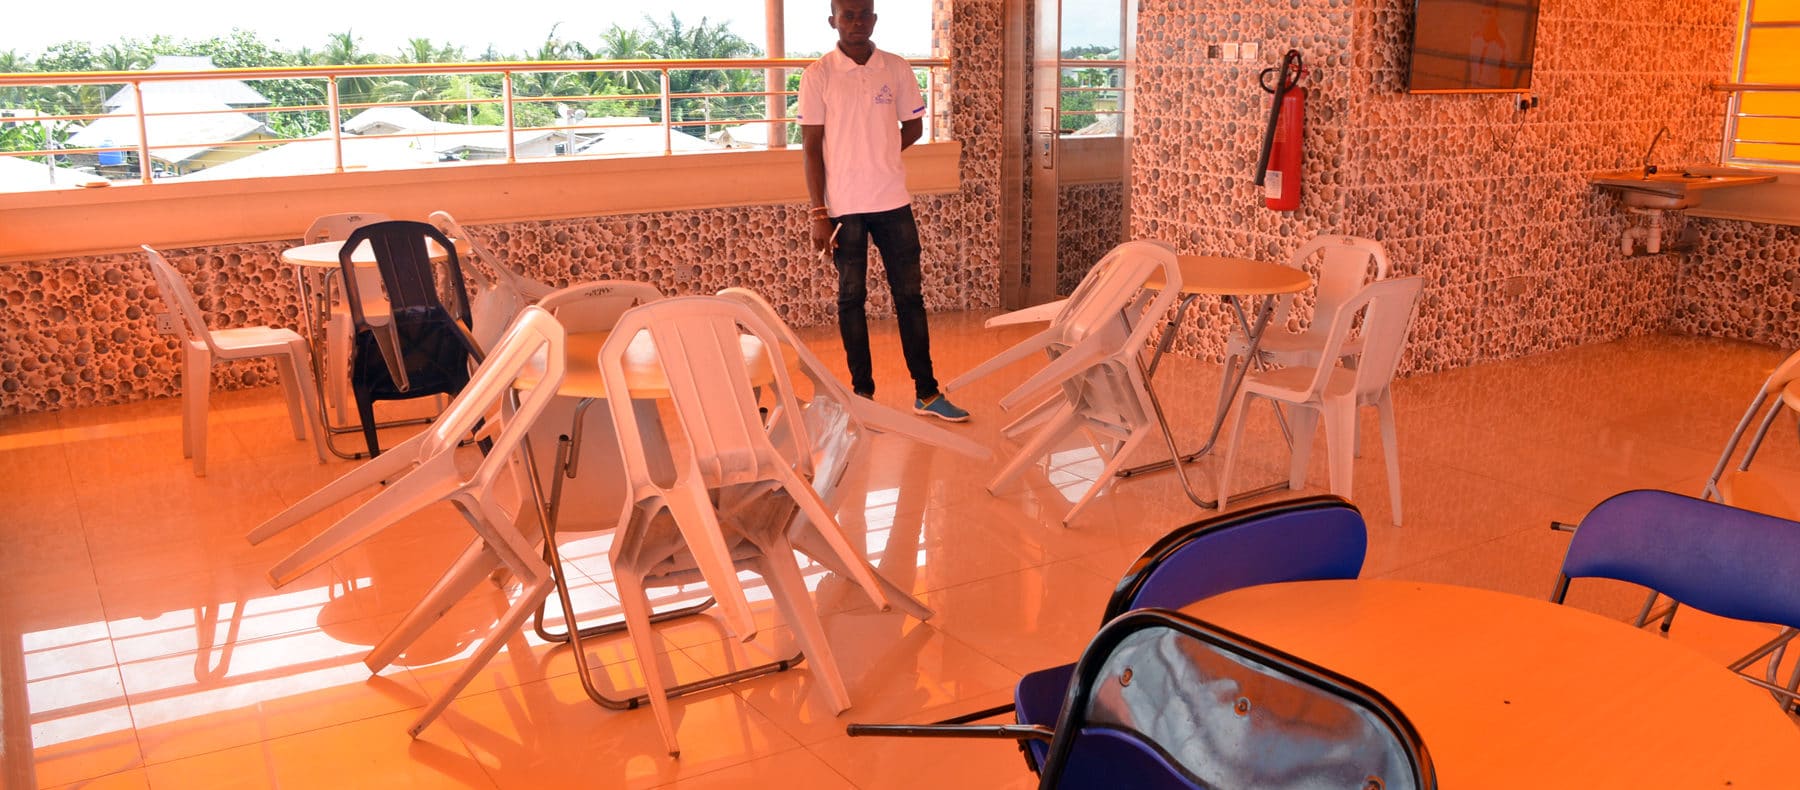 Hotel Standard Room In Badagry Lagos Nigeria